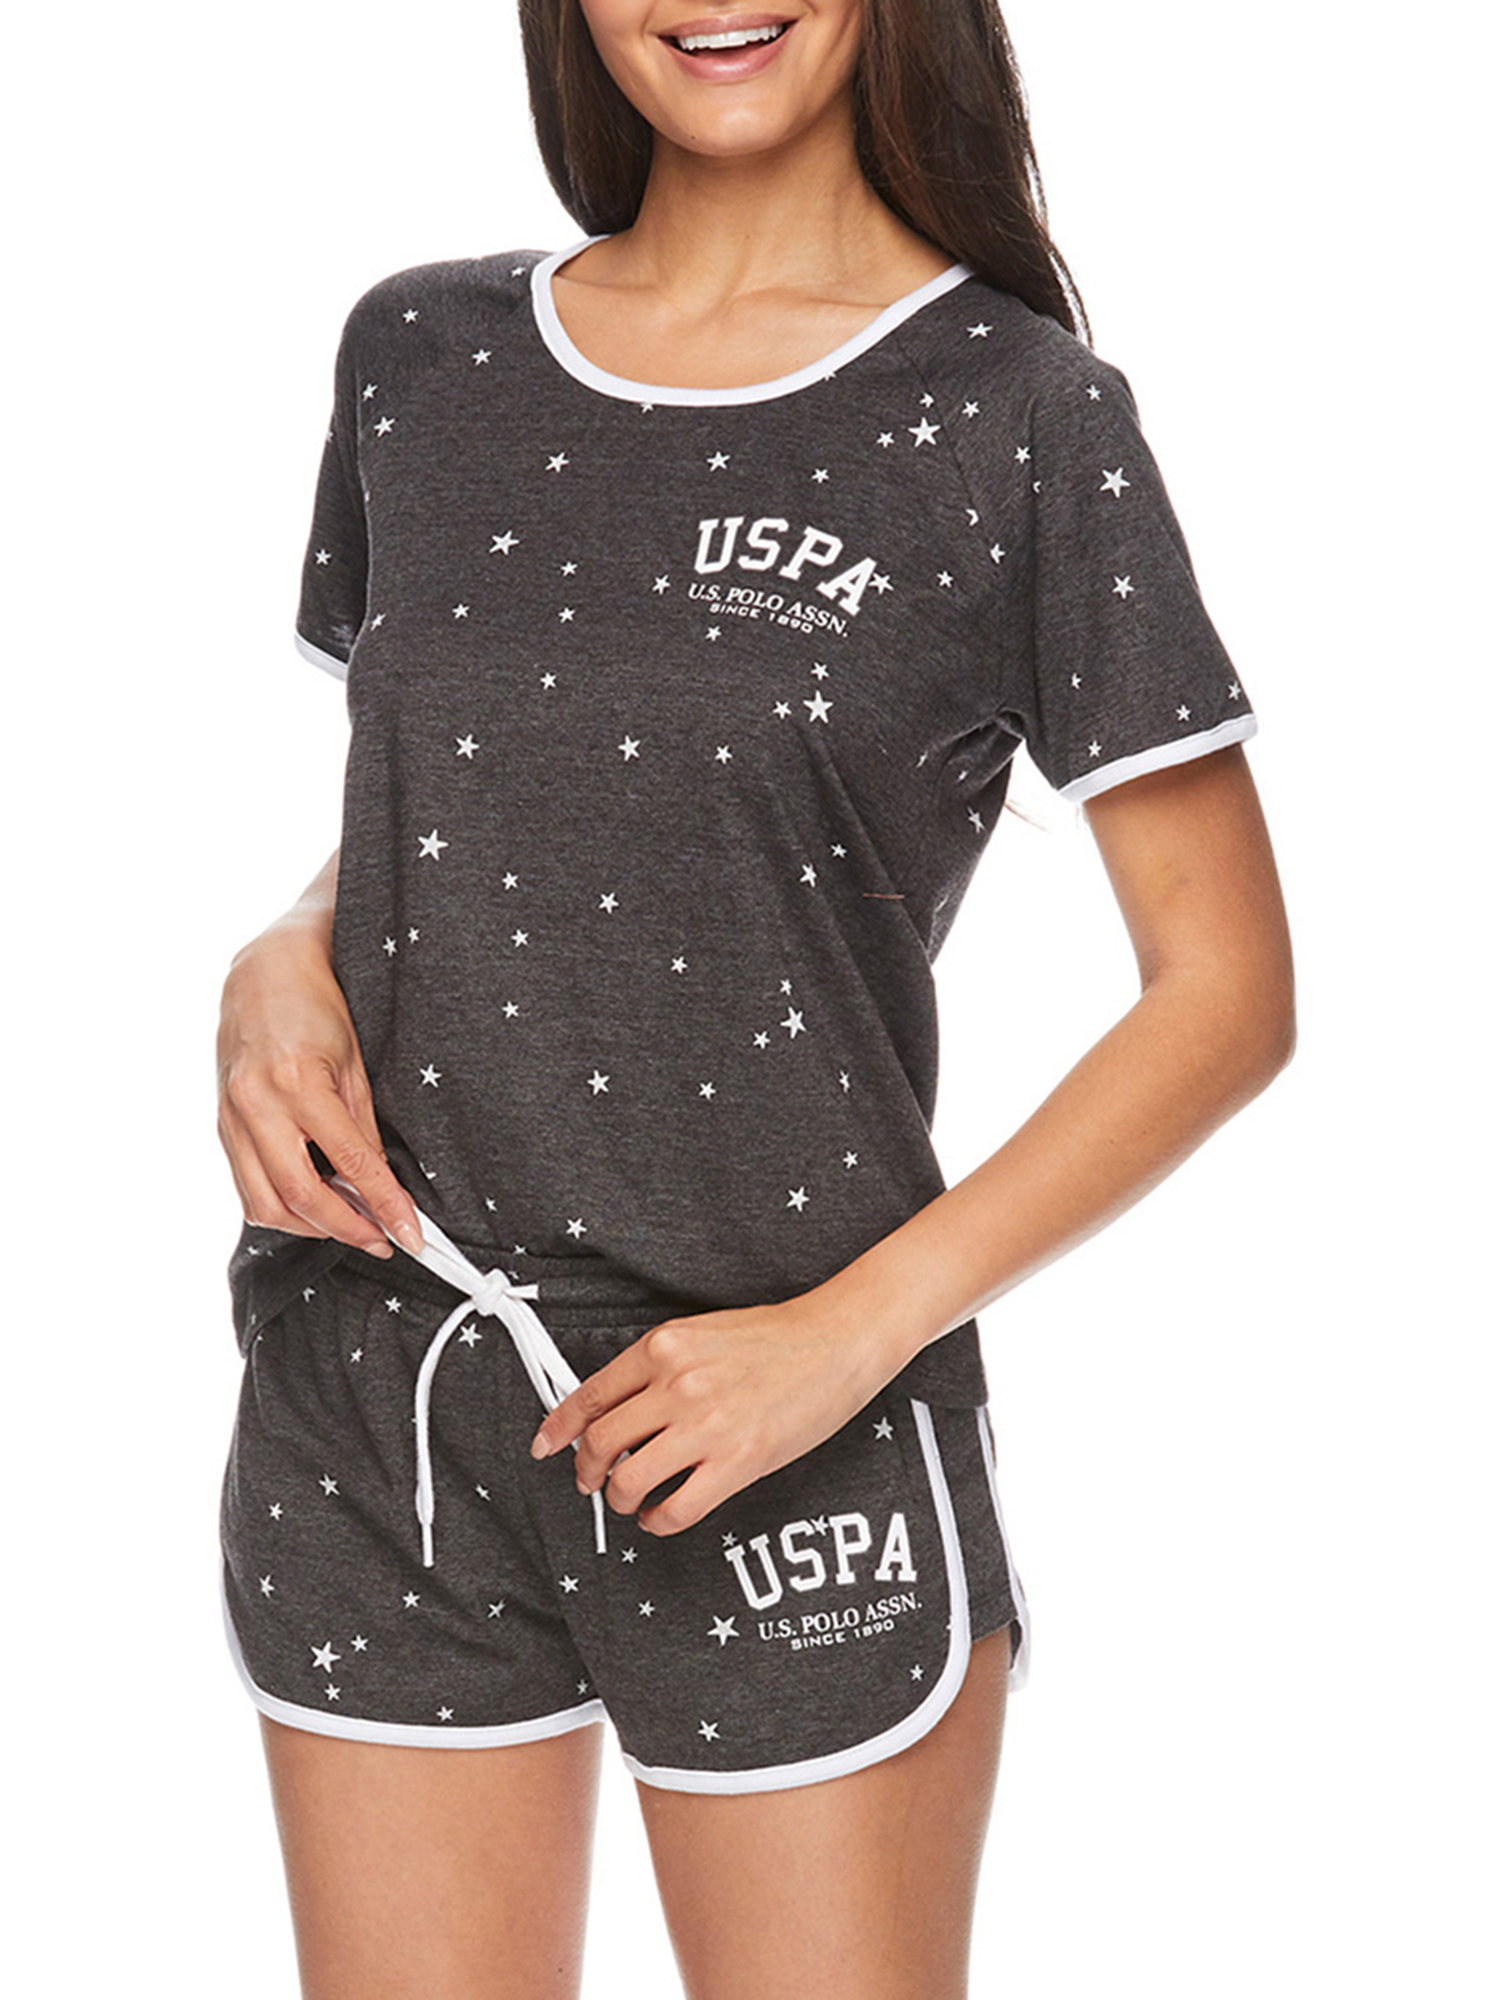 U.S. Polo Assn. Women's 2pc Short Sleeve Scoop-Neck Top and Shorts Lounge Pajama Sleep Set - image 2 of 5